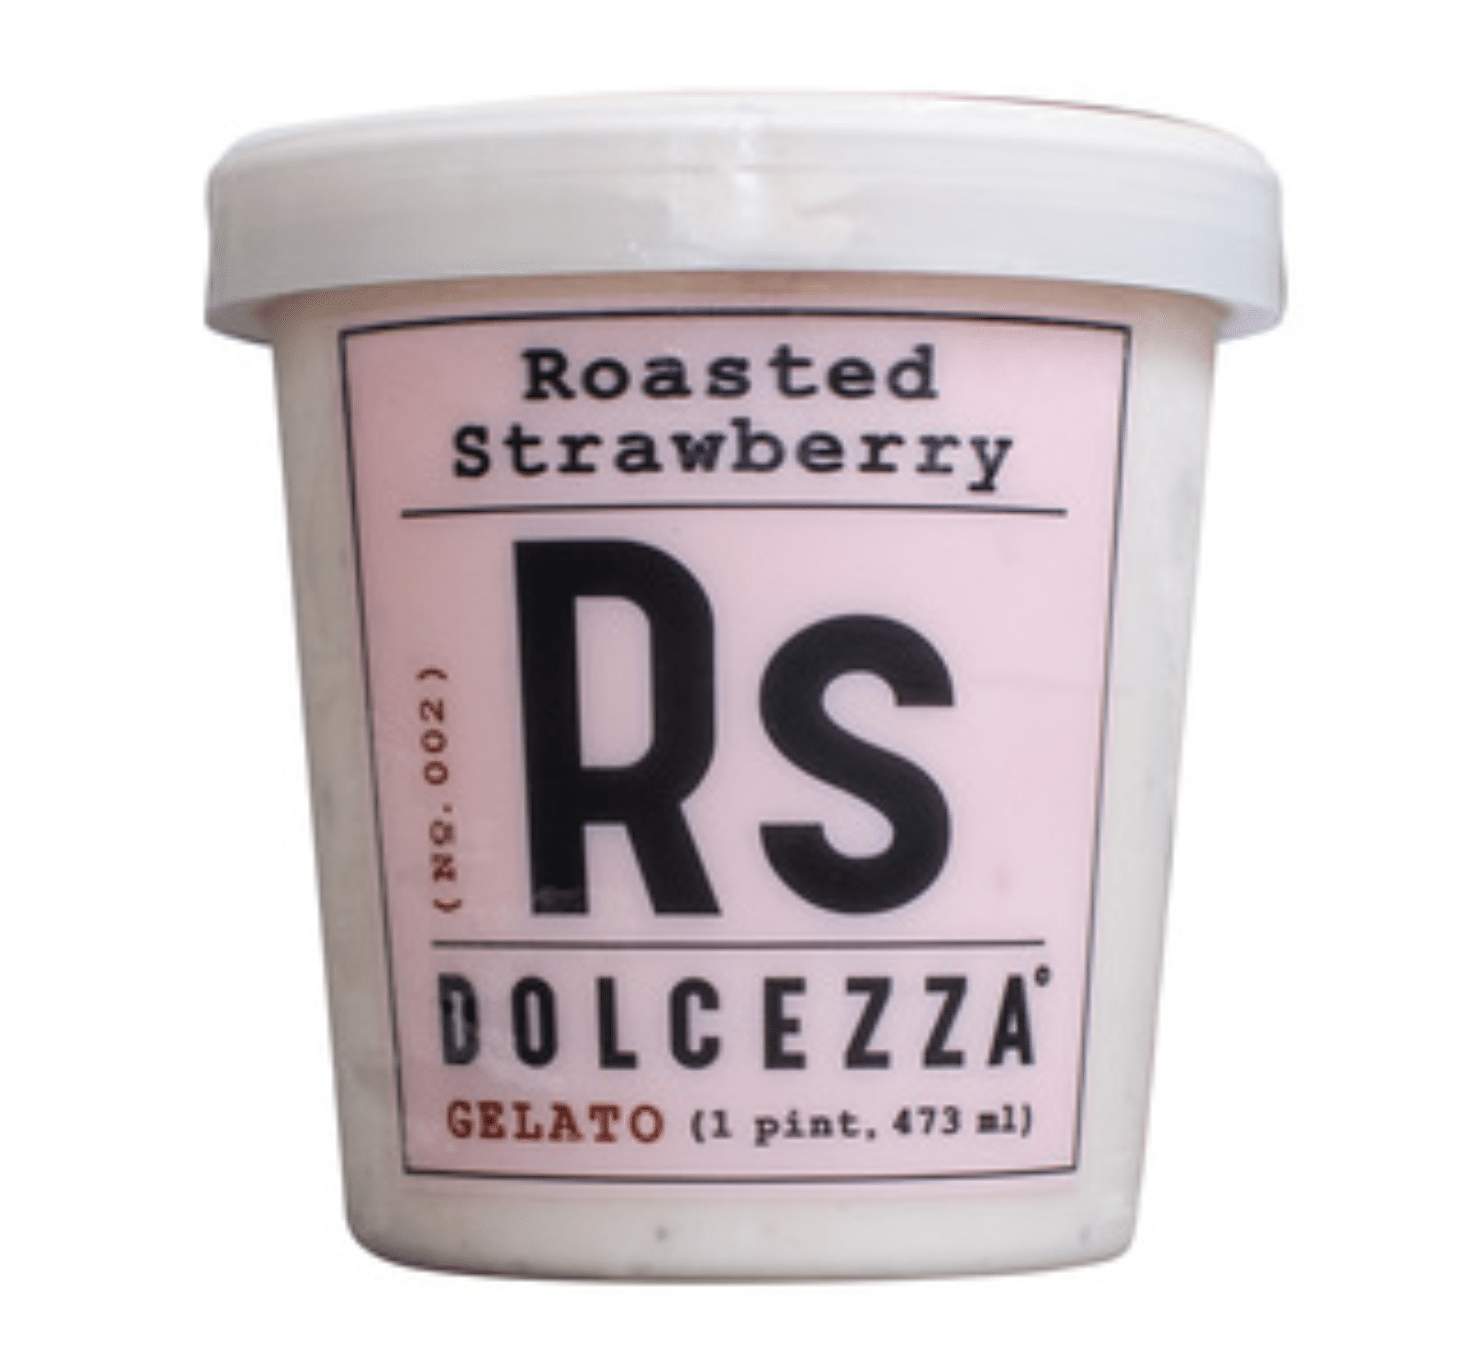 Roasted Strawberry gelato pint